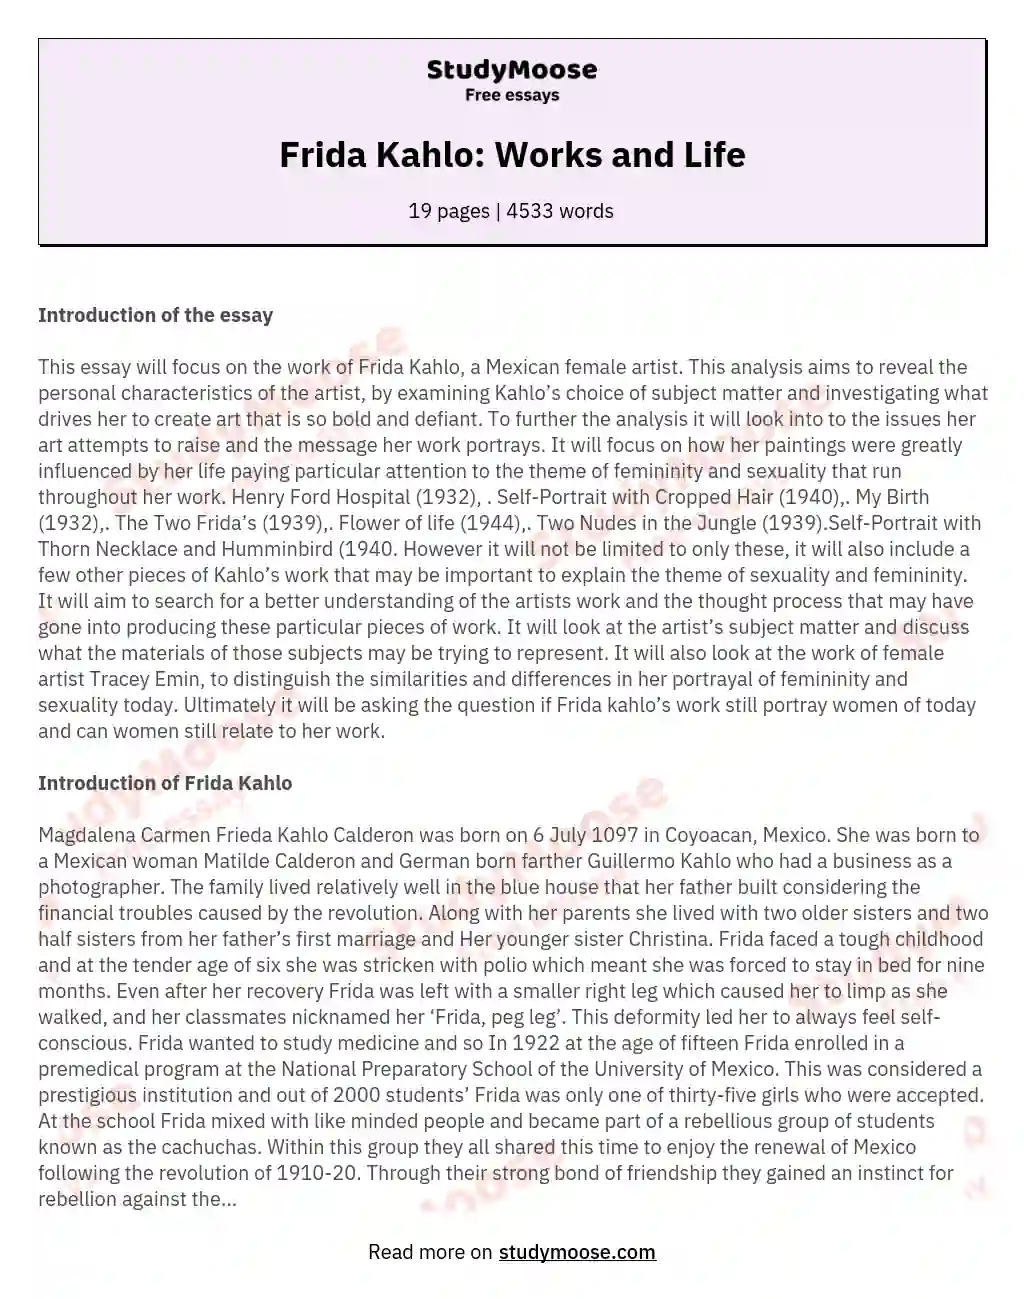 Frida Kahlo: Works and Life essay